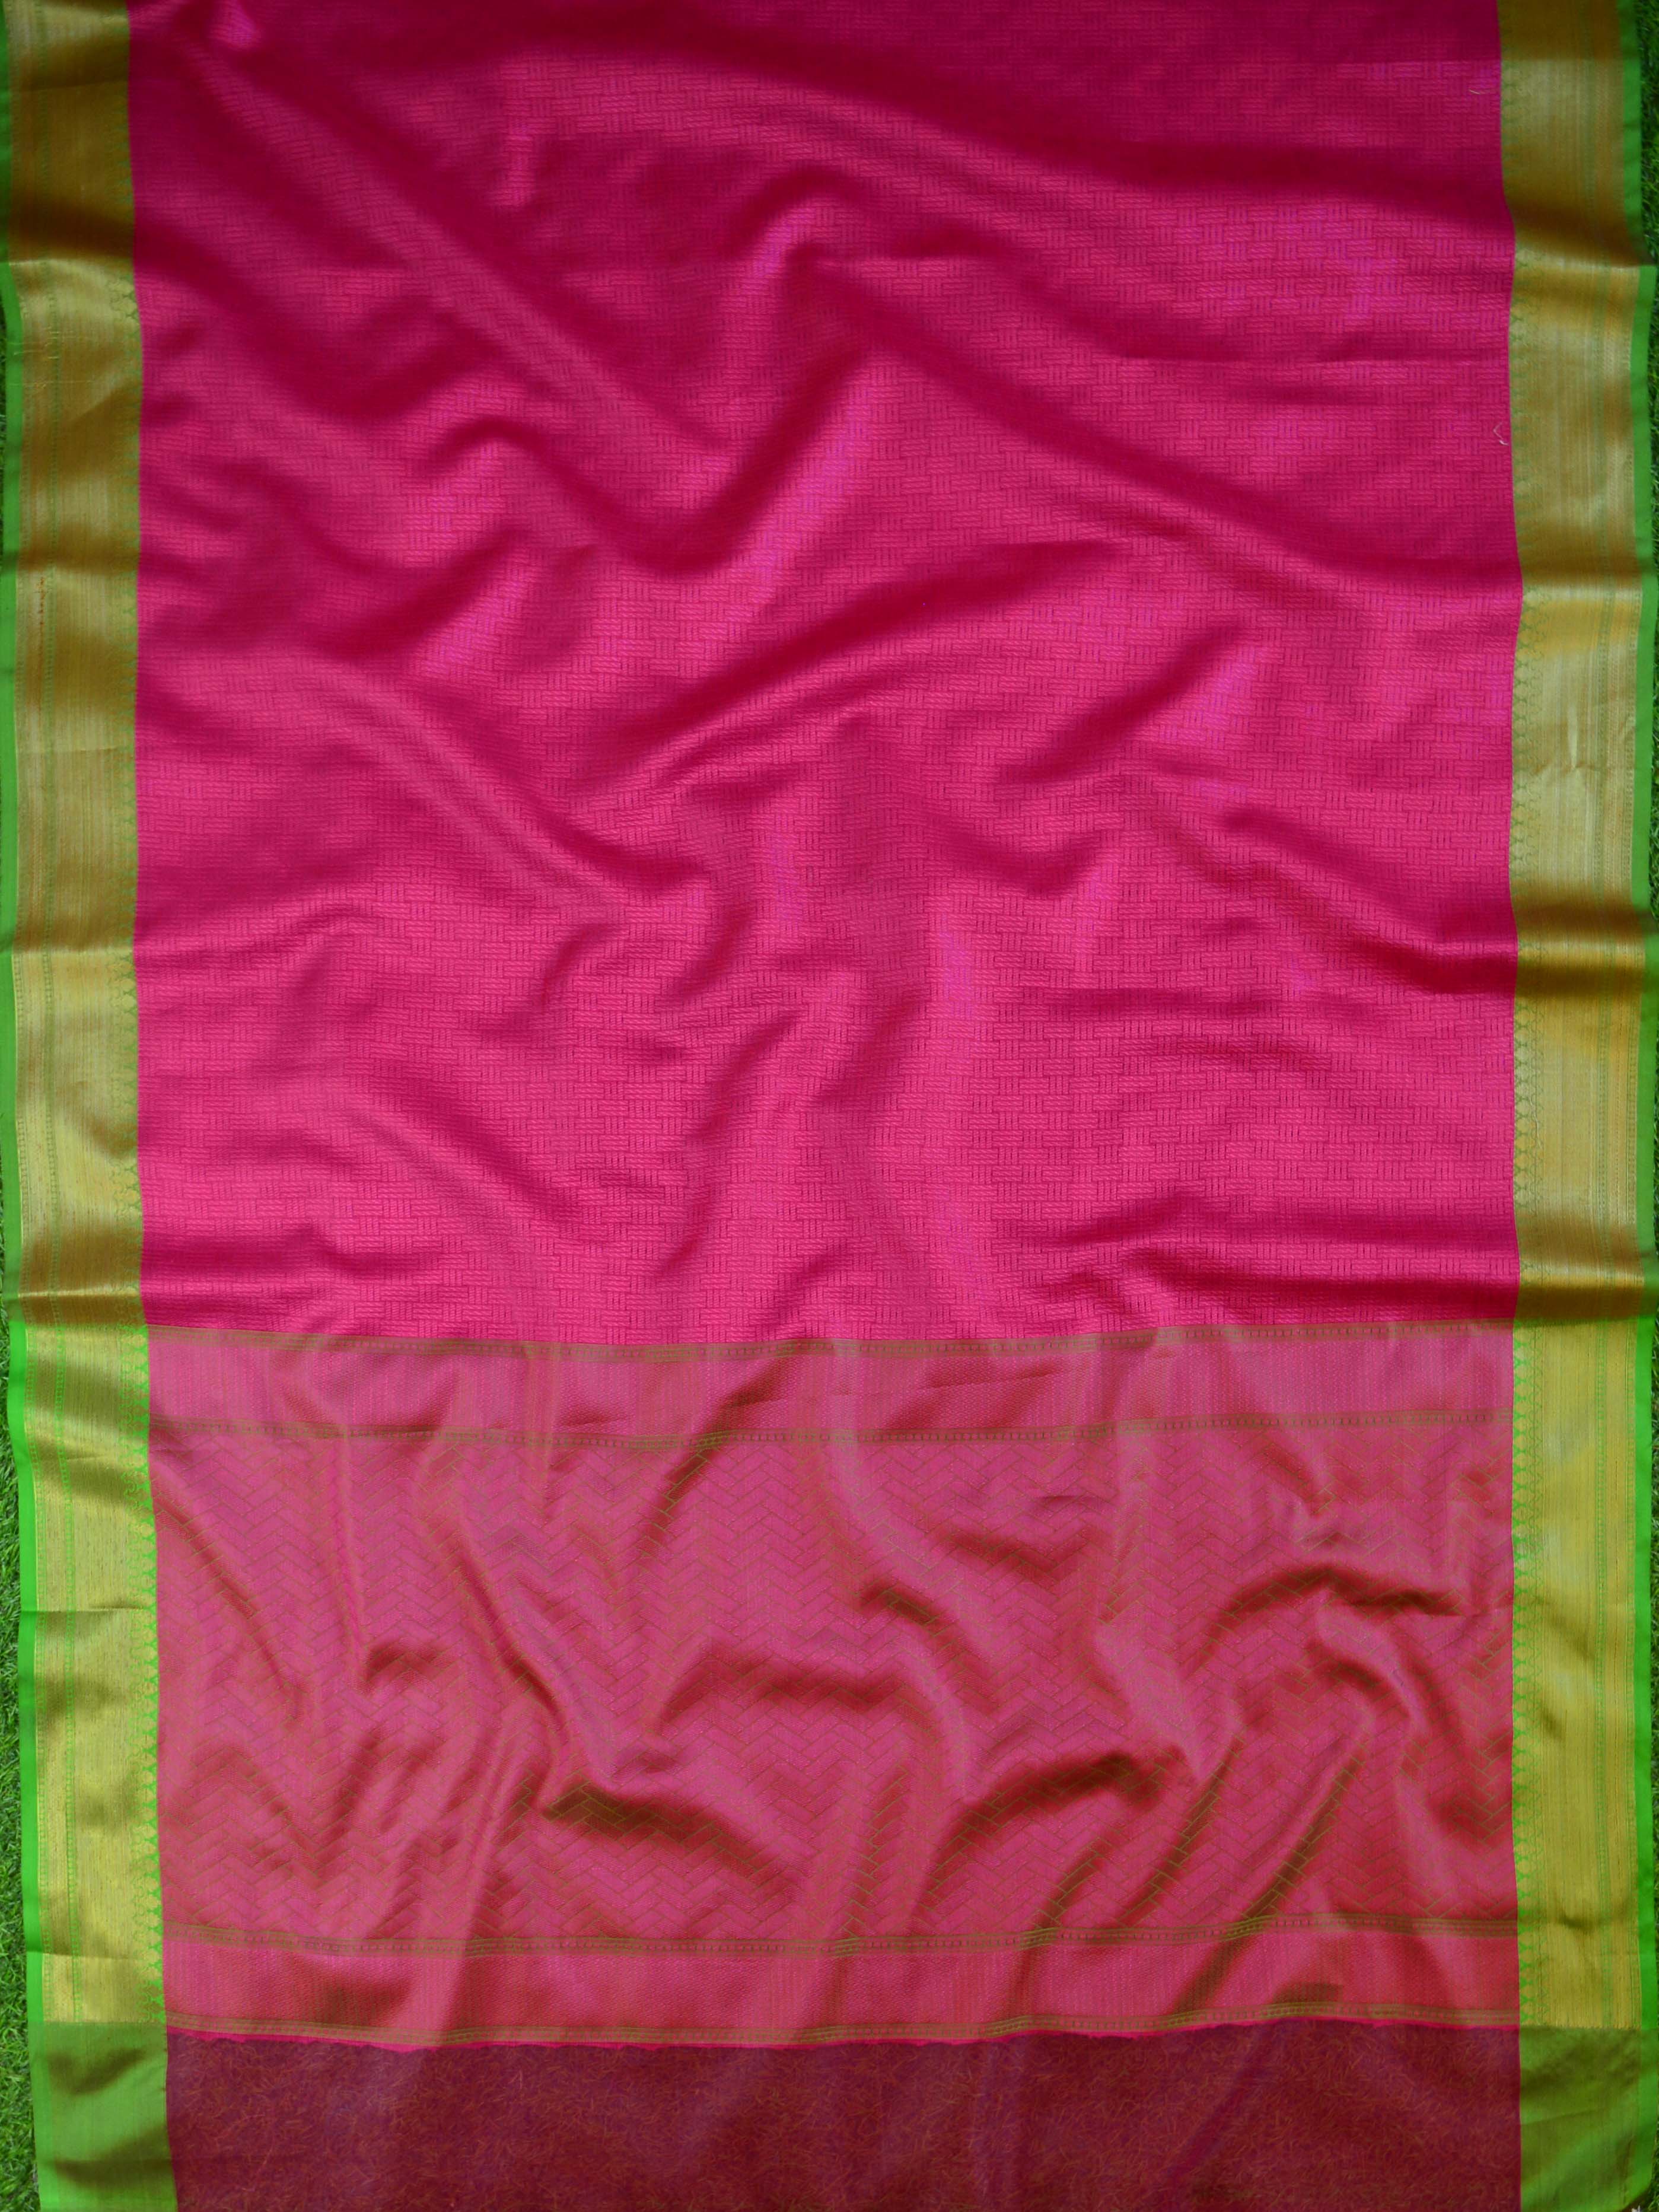 Banarasee Kora Muslin Saree With Tanchoi Weaving & Skirt Border-Magenta